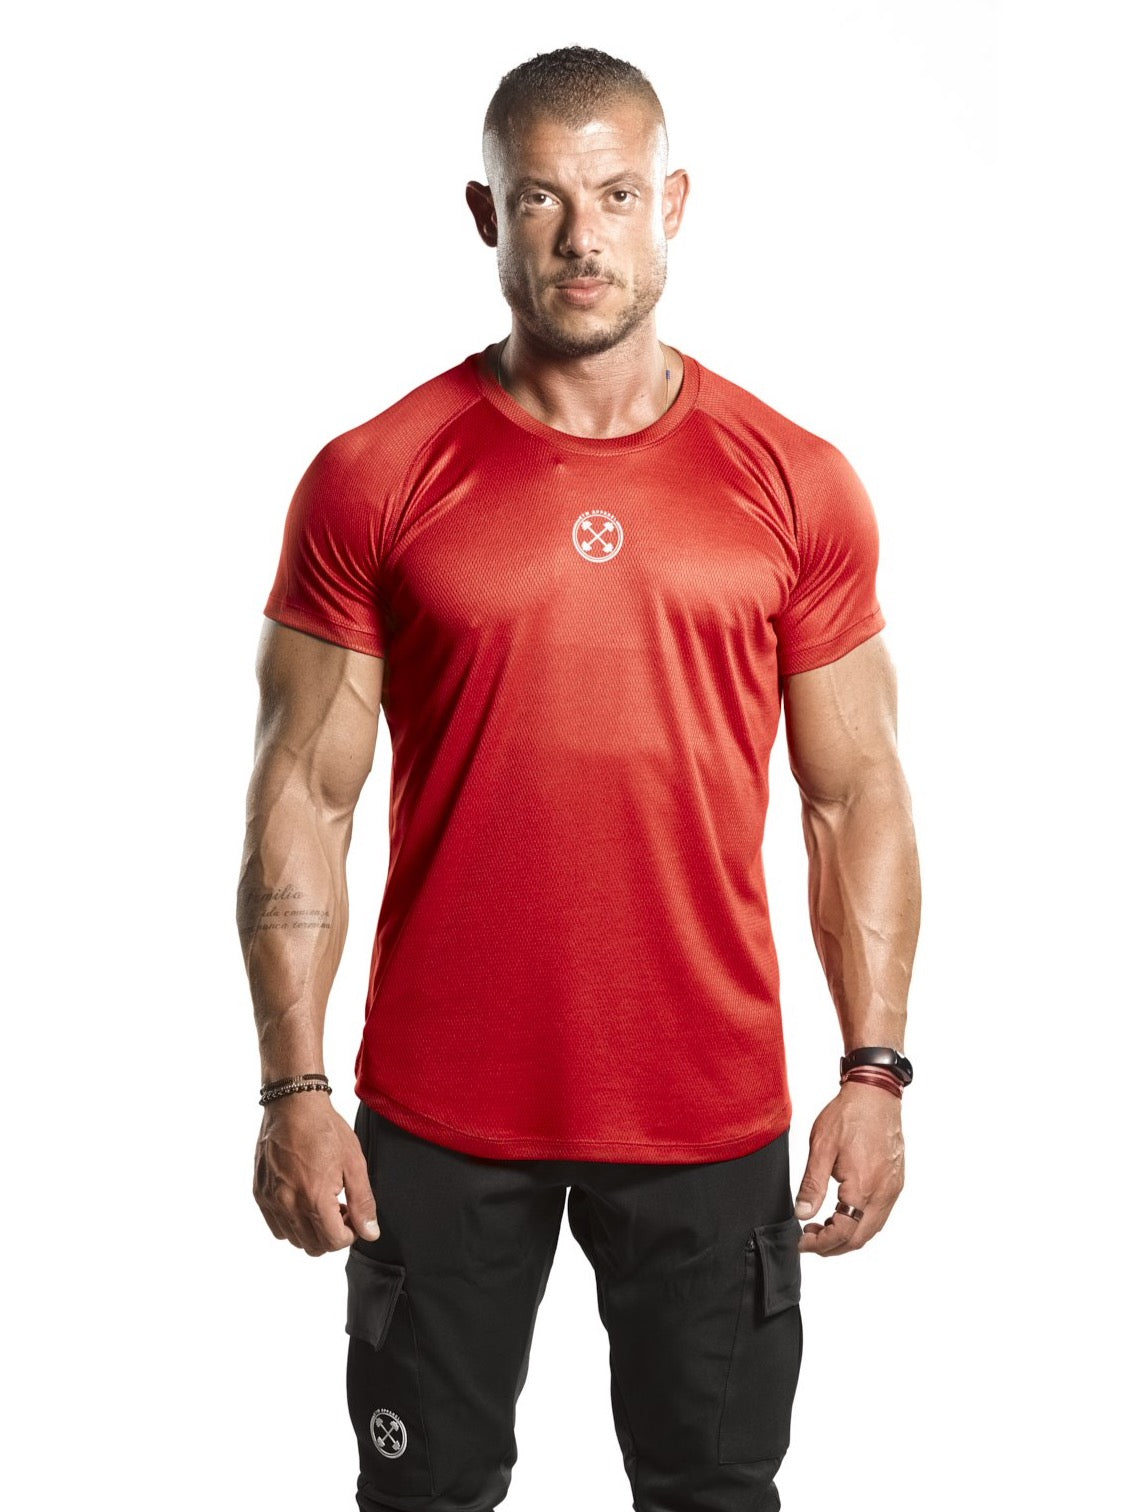 ULTRA Mesh Raglan T-Shirt [Red] - T-Shirt - Gym Apparel Egypt